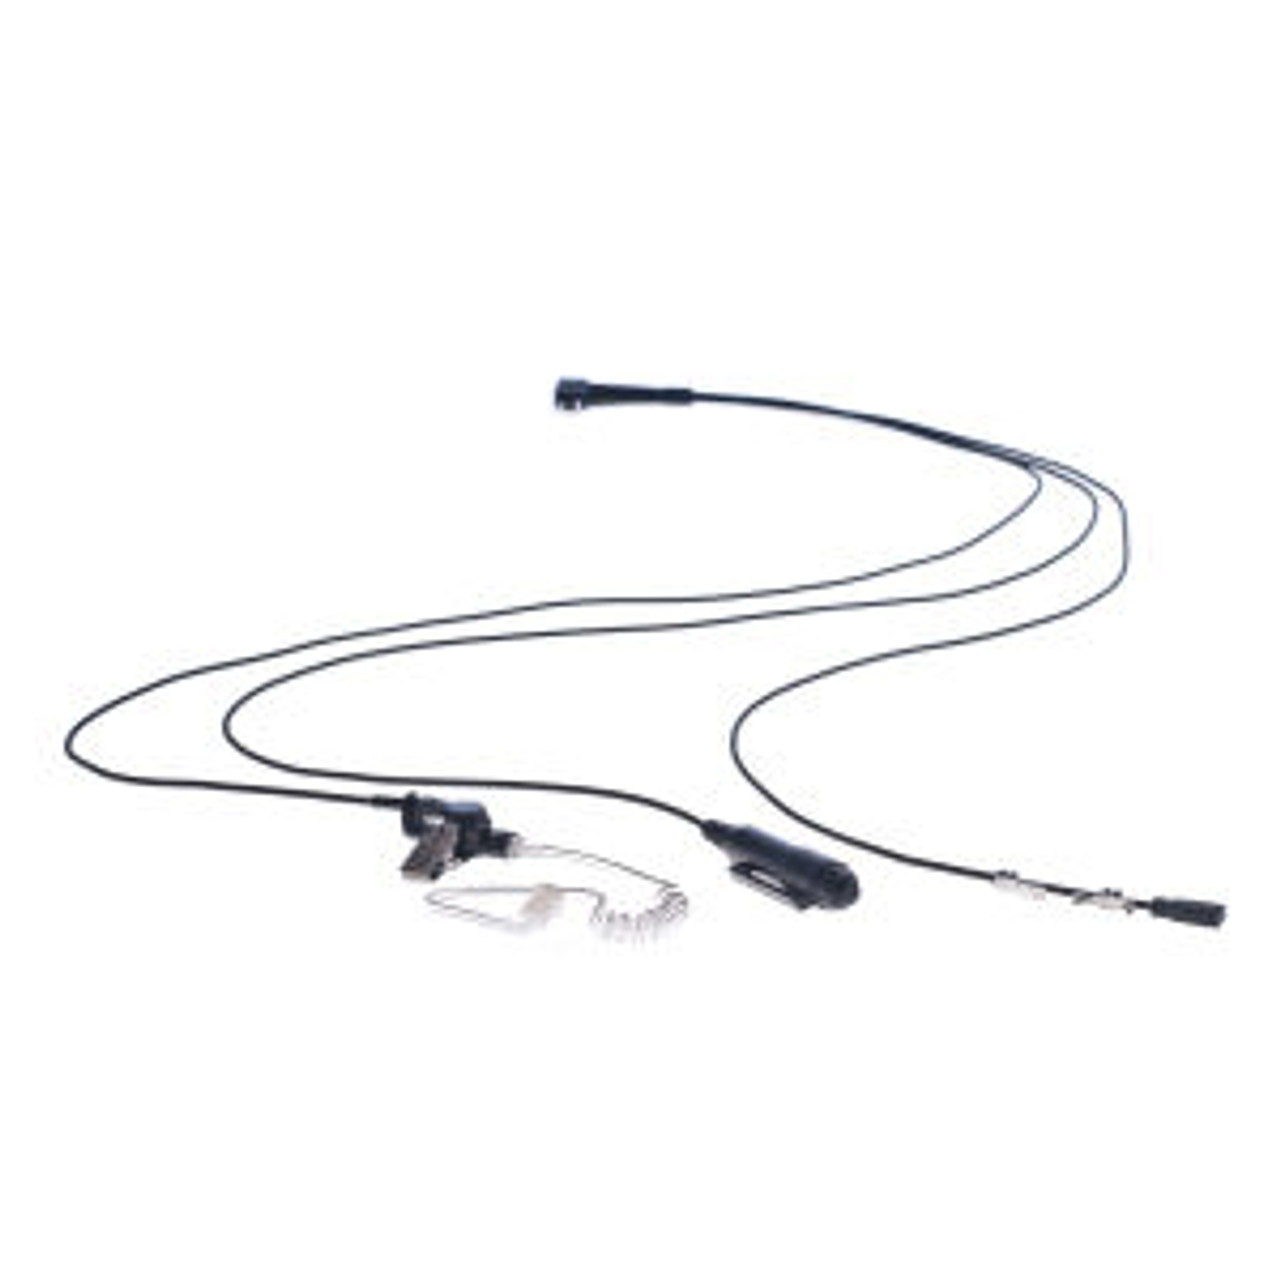 Kenwood TH-D74A 3-Wire Surveillance Kit